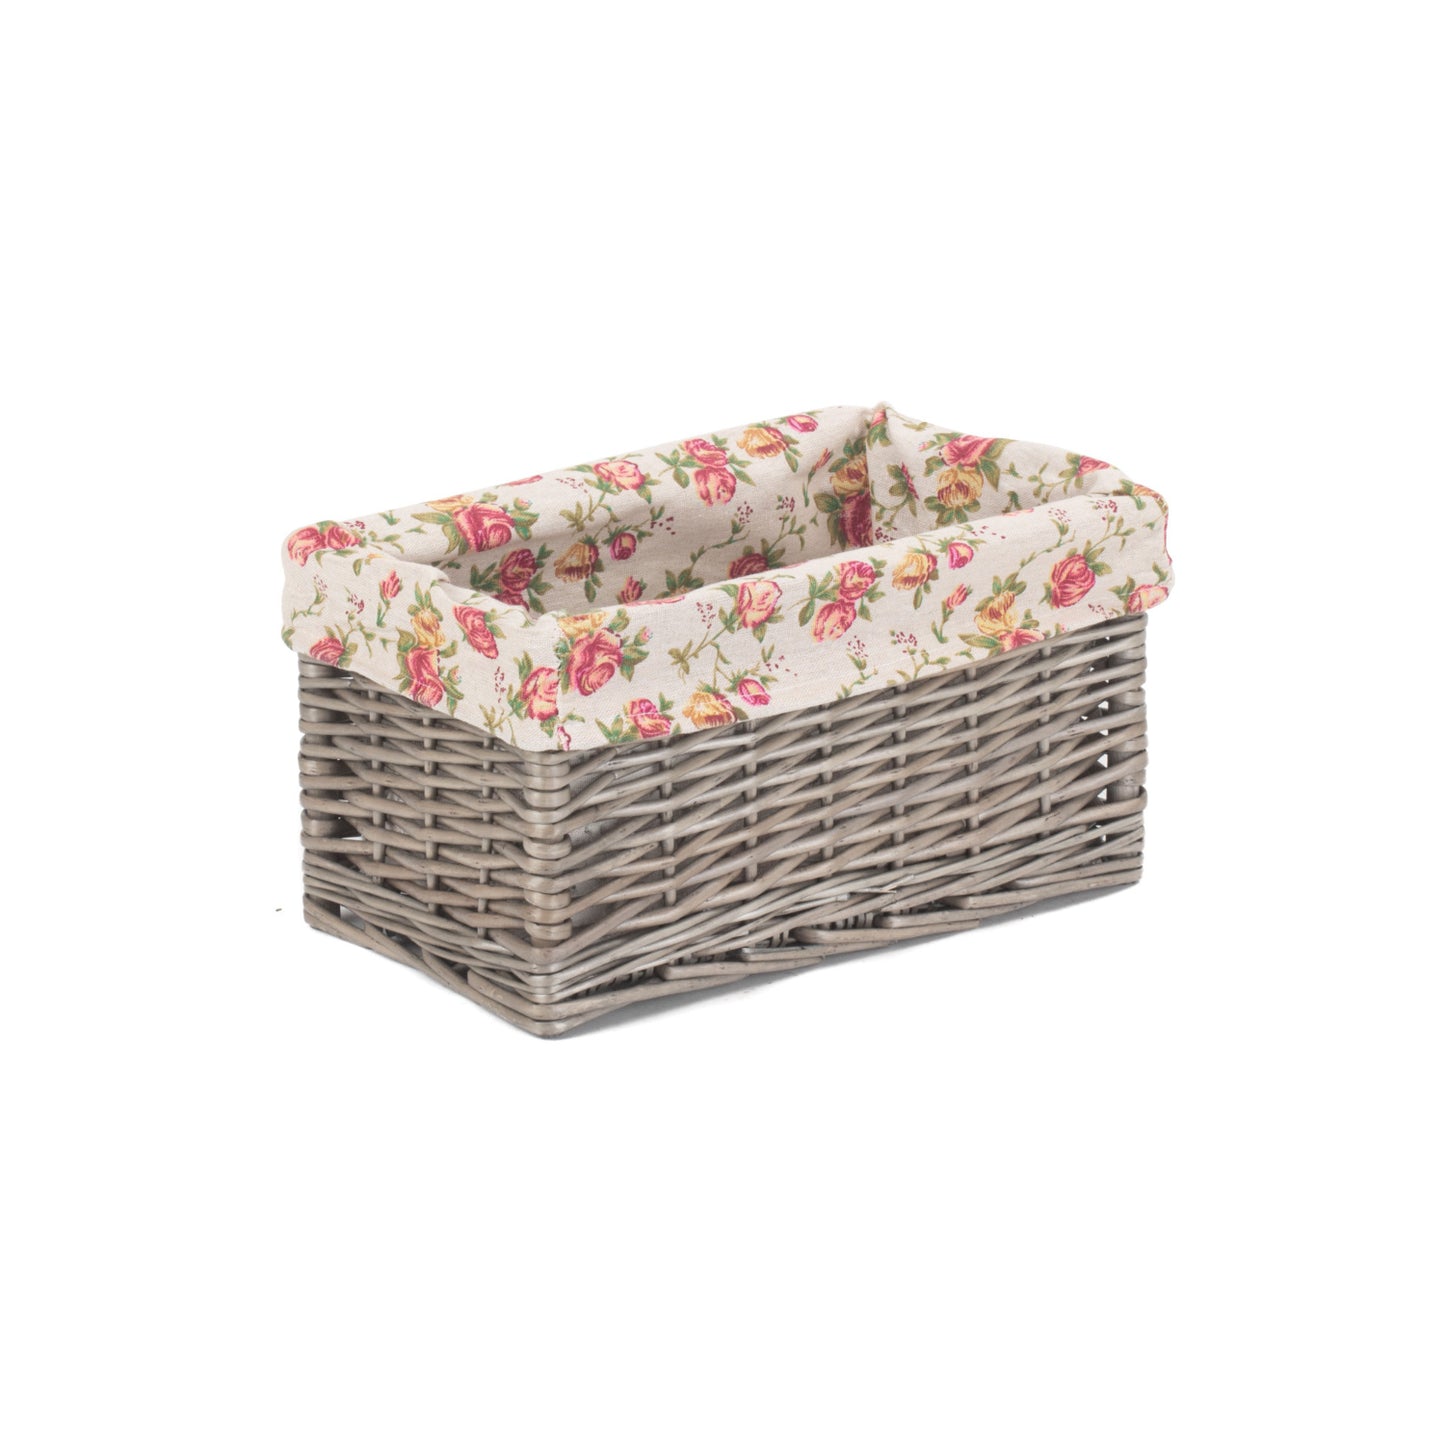 Small Antique Wash Garden Rose Lined Storage Basket